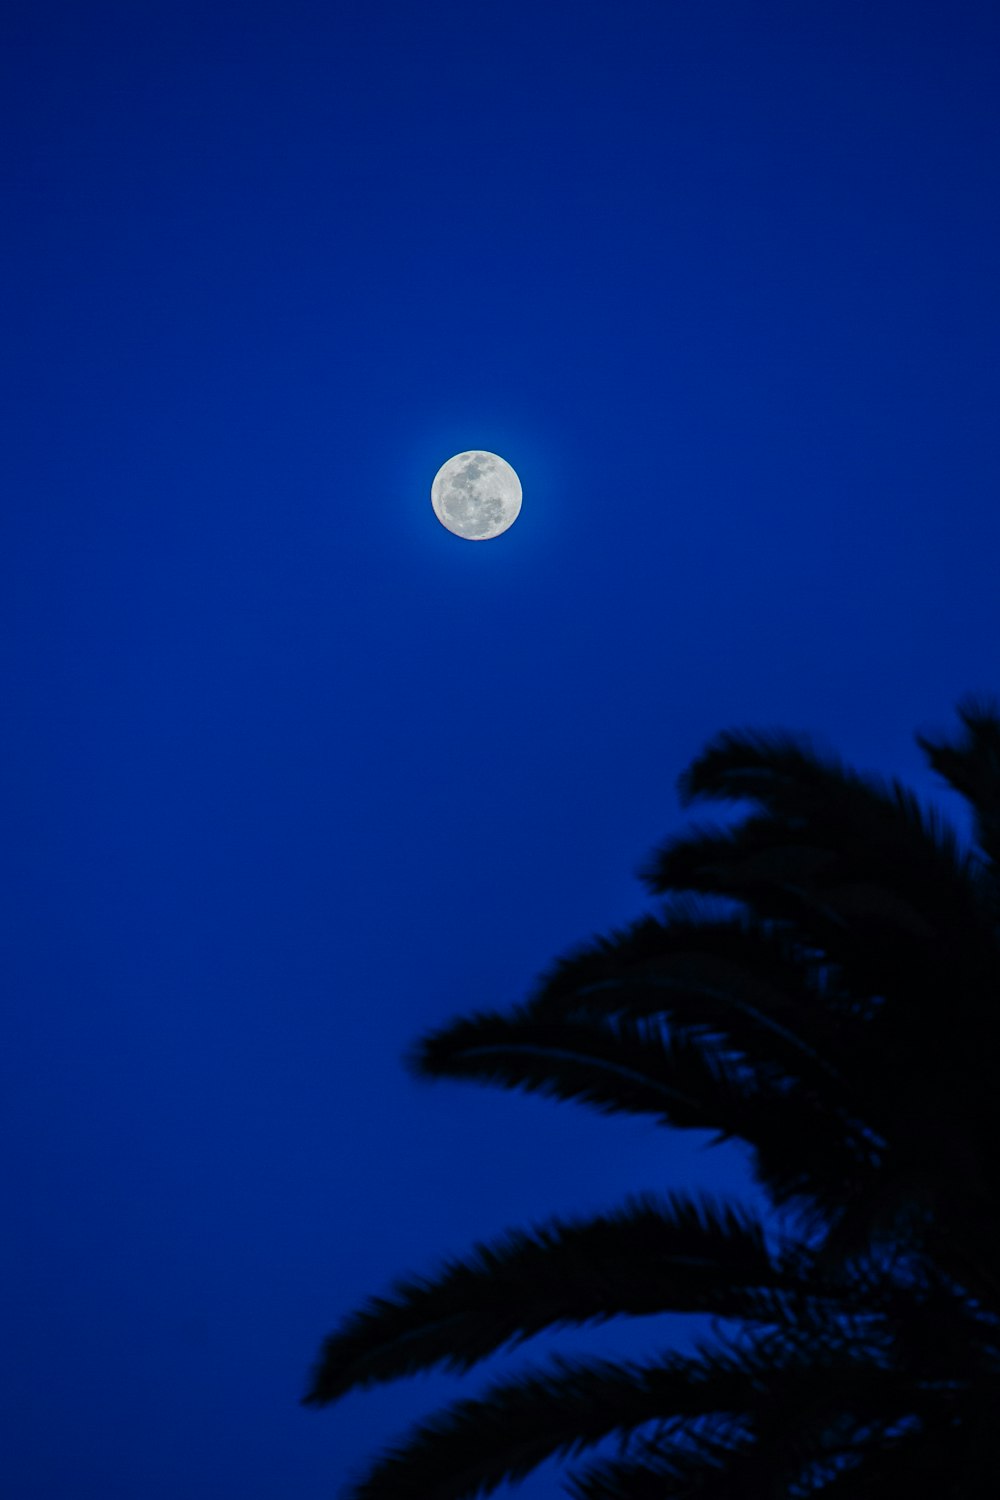 full moon at a blue sky